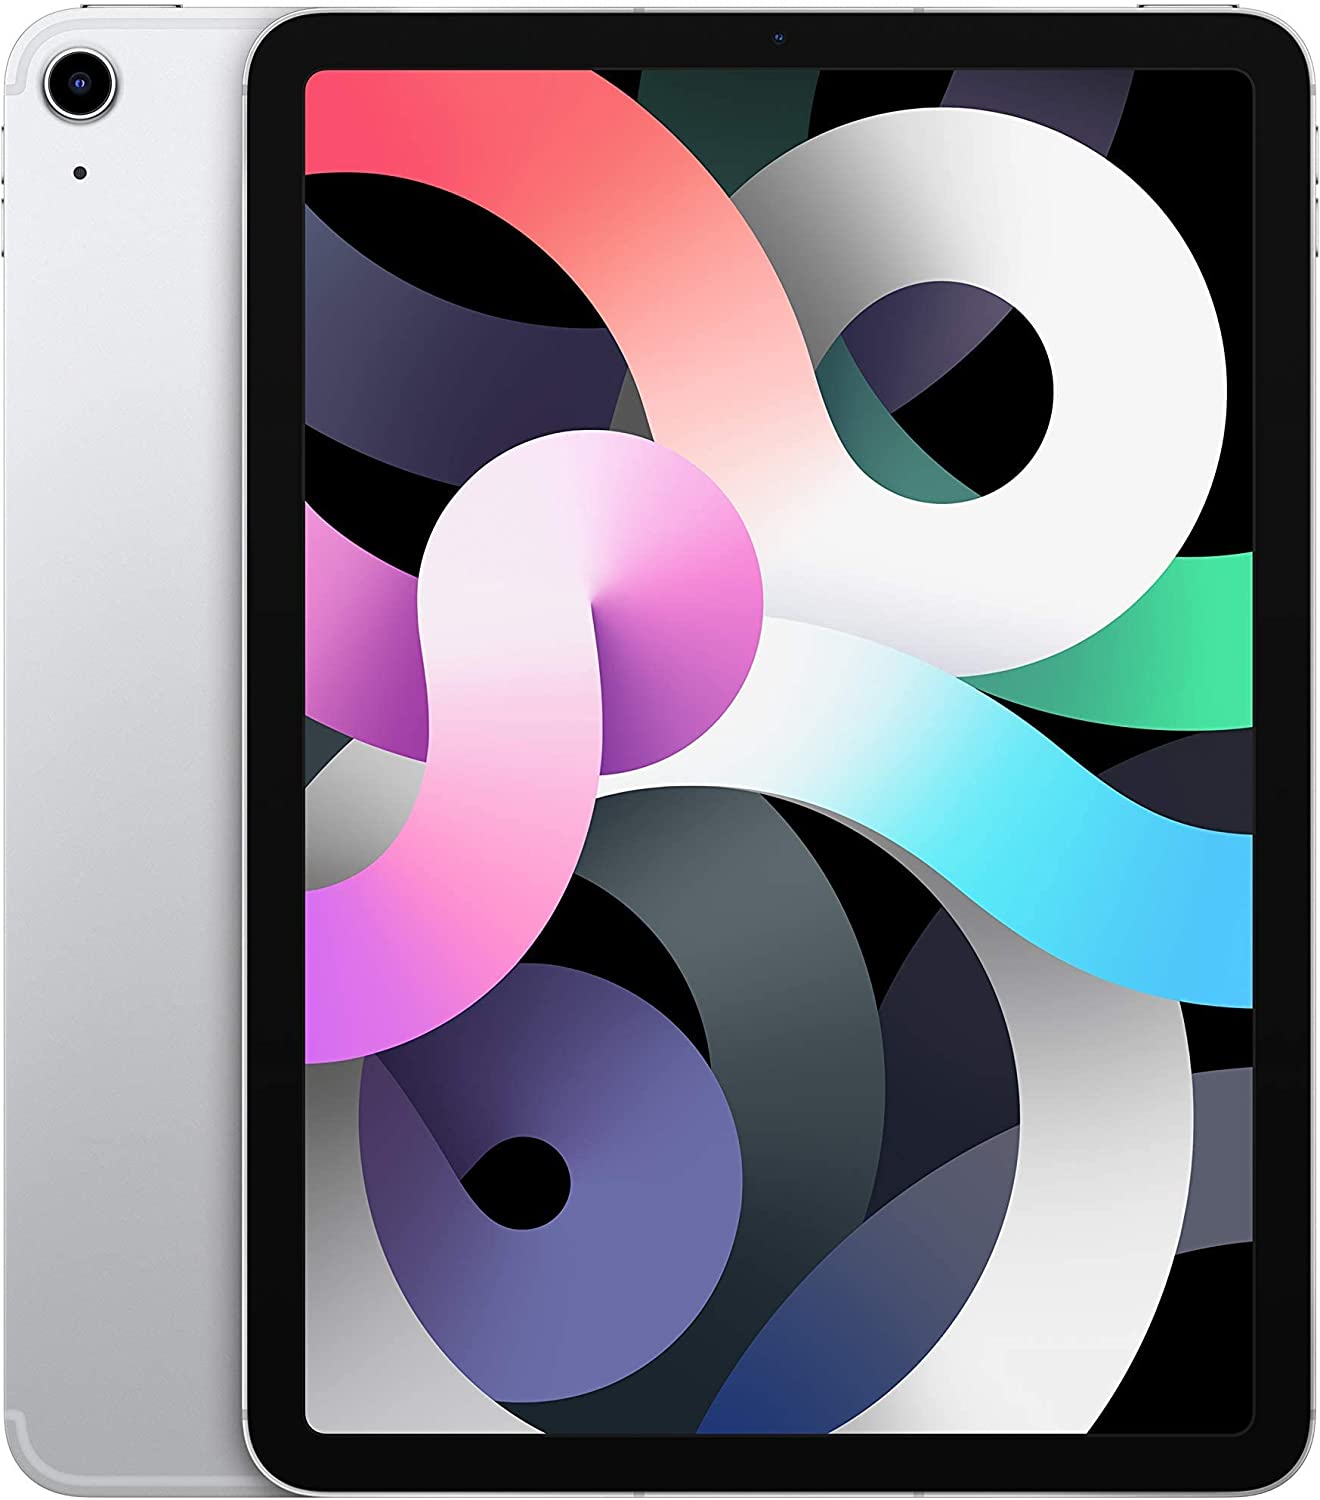 Apple iPad Air 4th Gen 2020, 64GB, WIFI + Unlocked All Carriers - Silver (Refurbished)